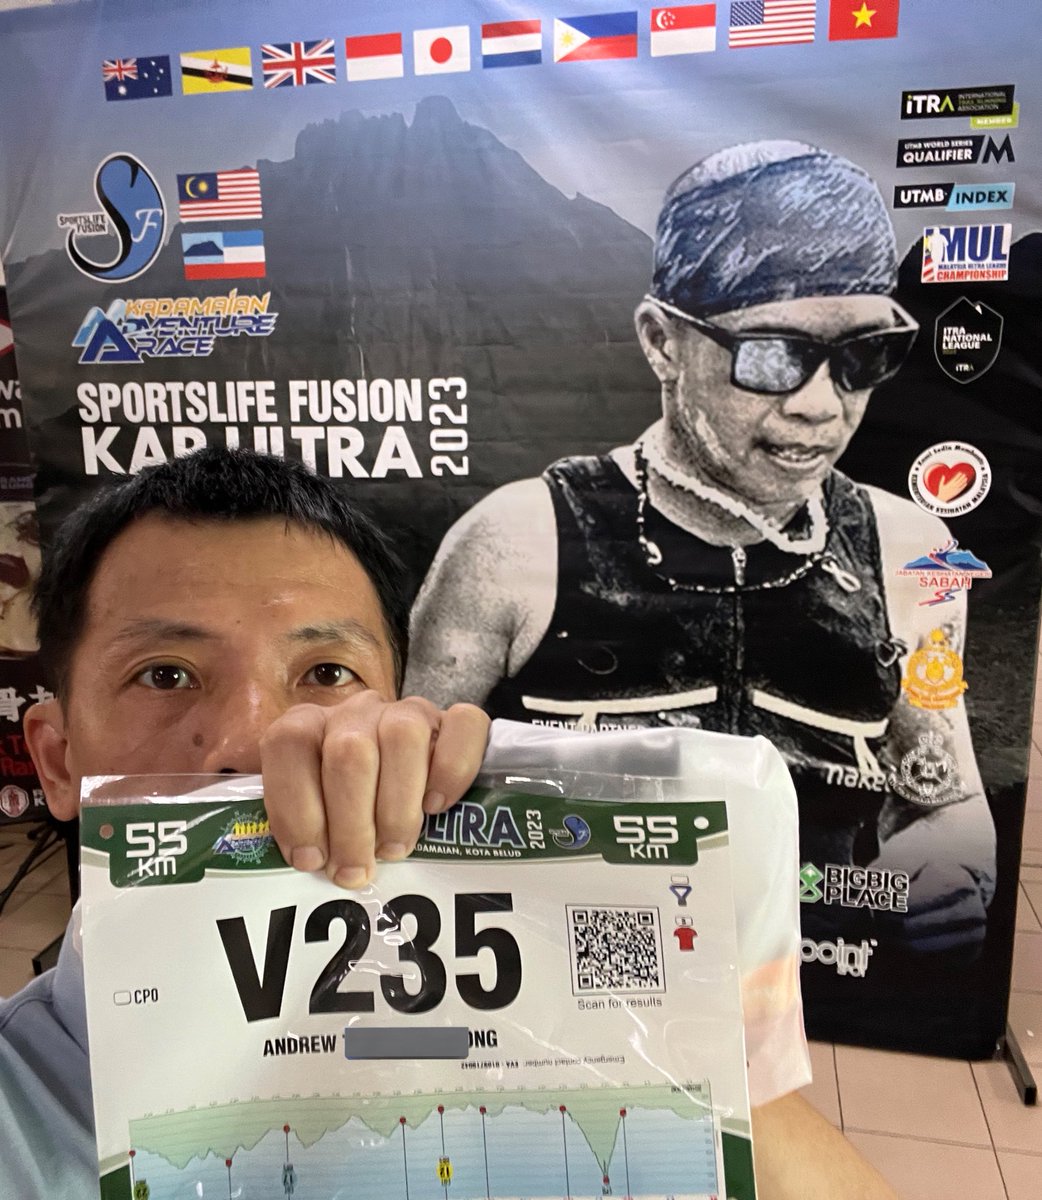 💪🏼🏃🏻‍♂️My bid number. Here I goes 55K #ultratrailmarathon #ultramarathon #karultra